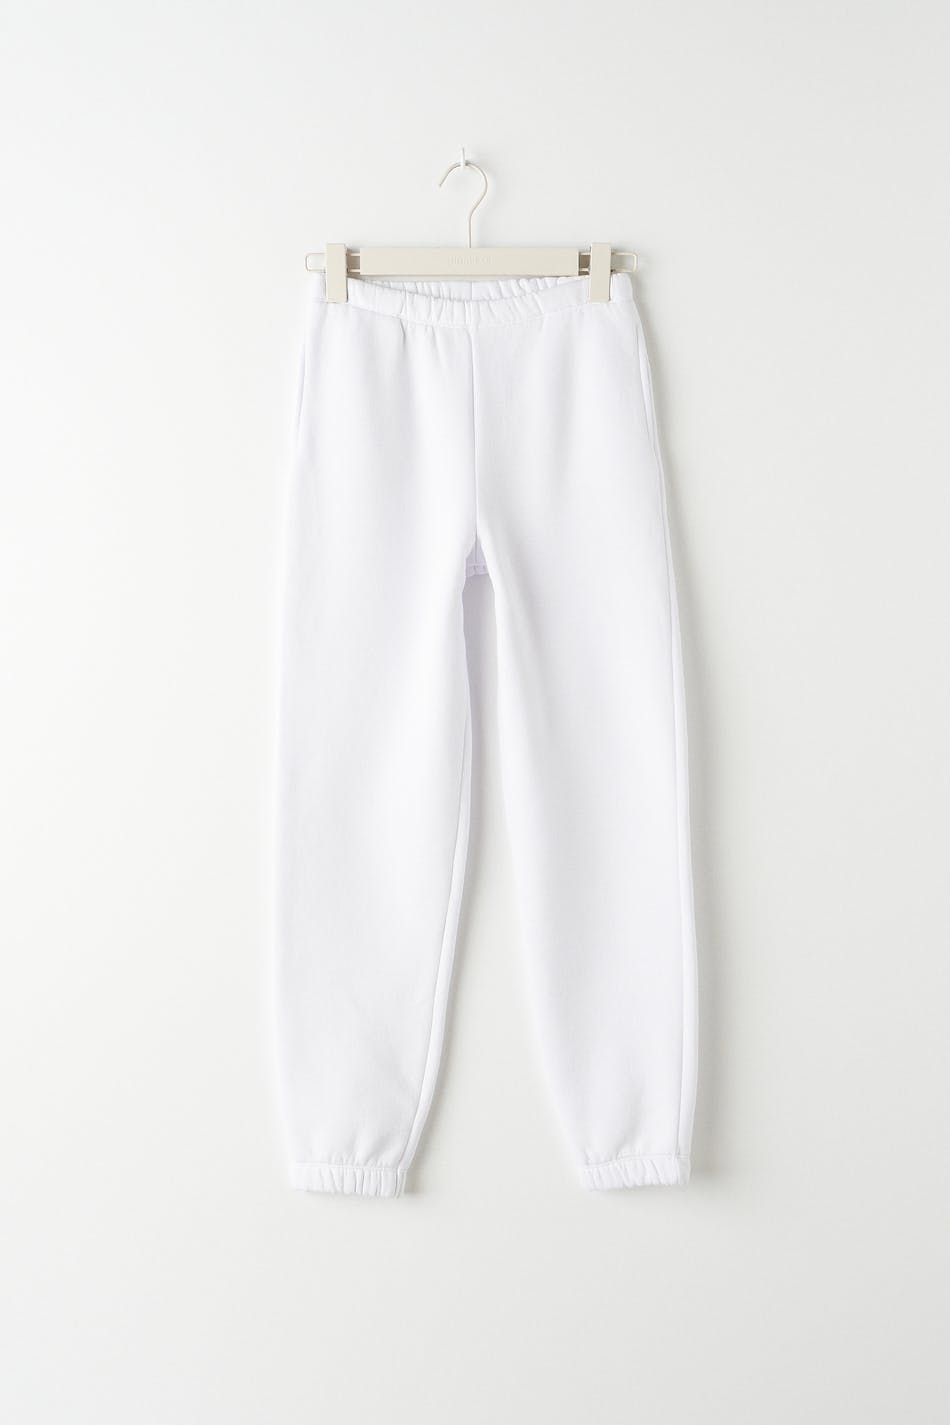 Gina Tricot - Y Basic Sweatpants - Weiß - 146/152 - Damen